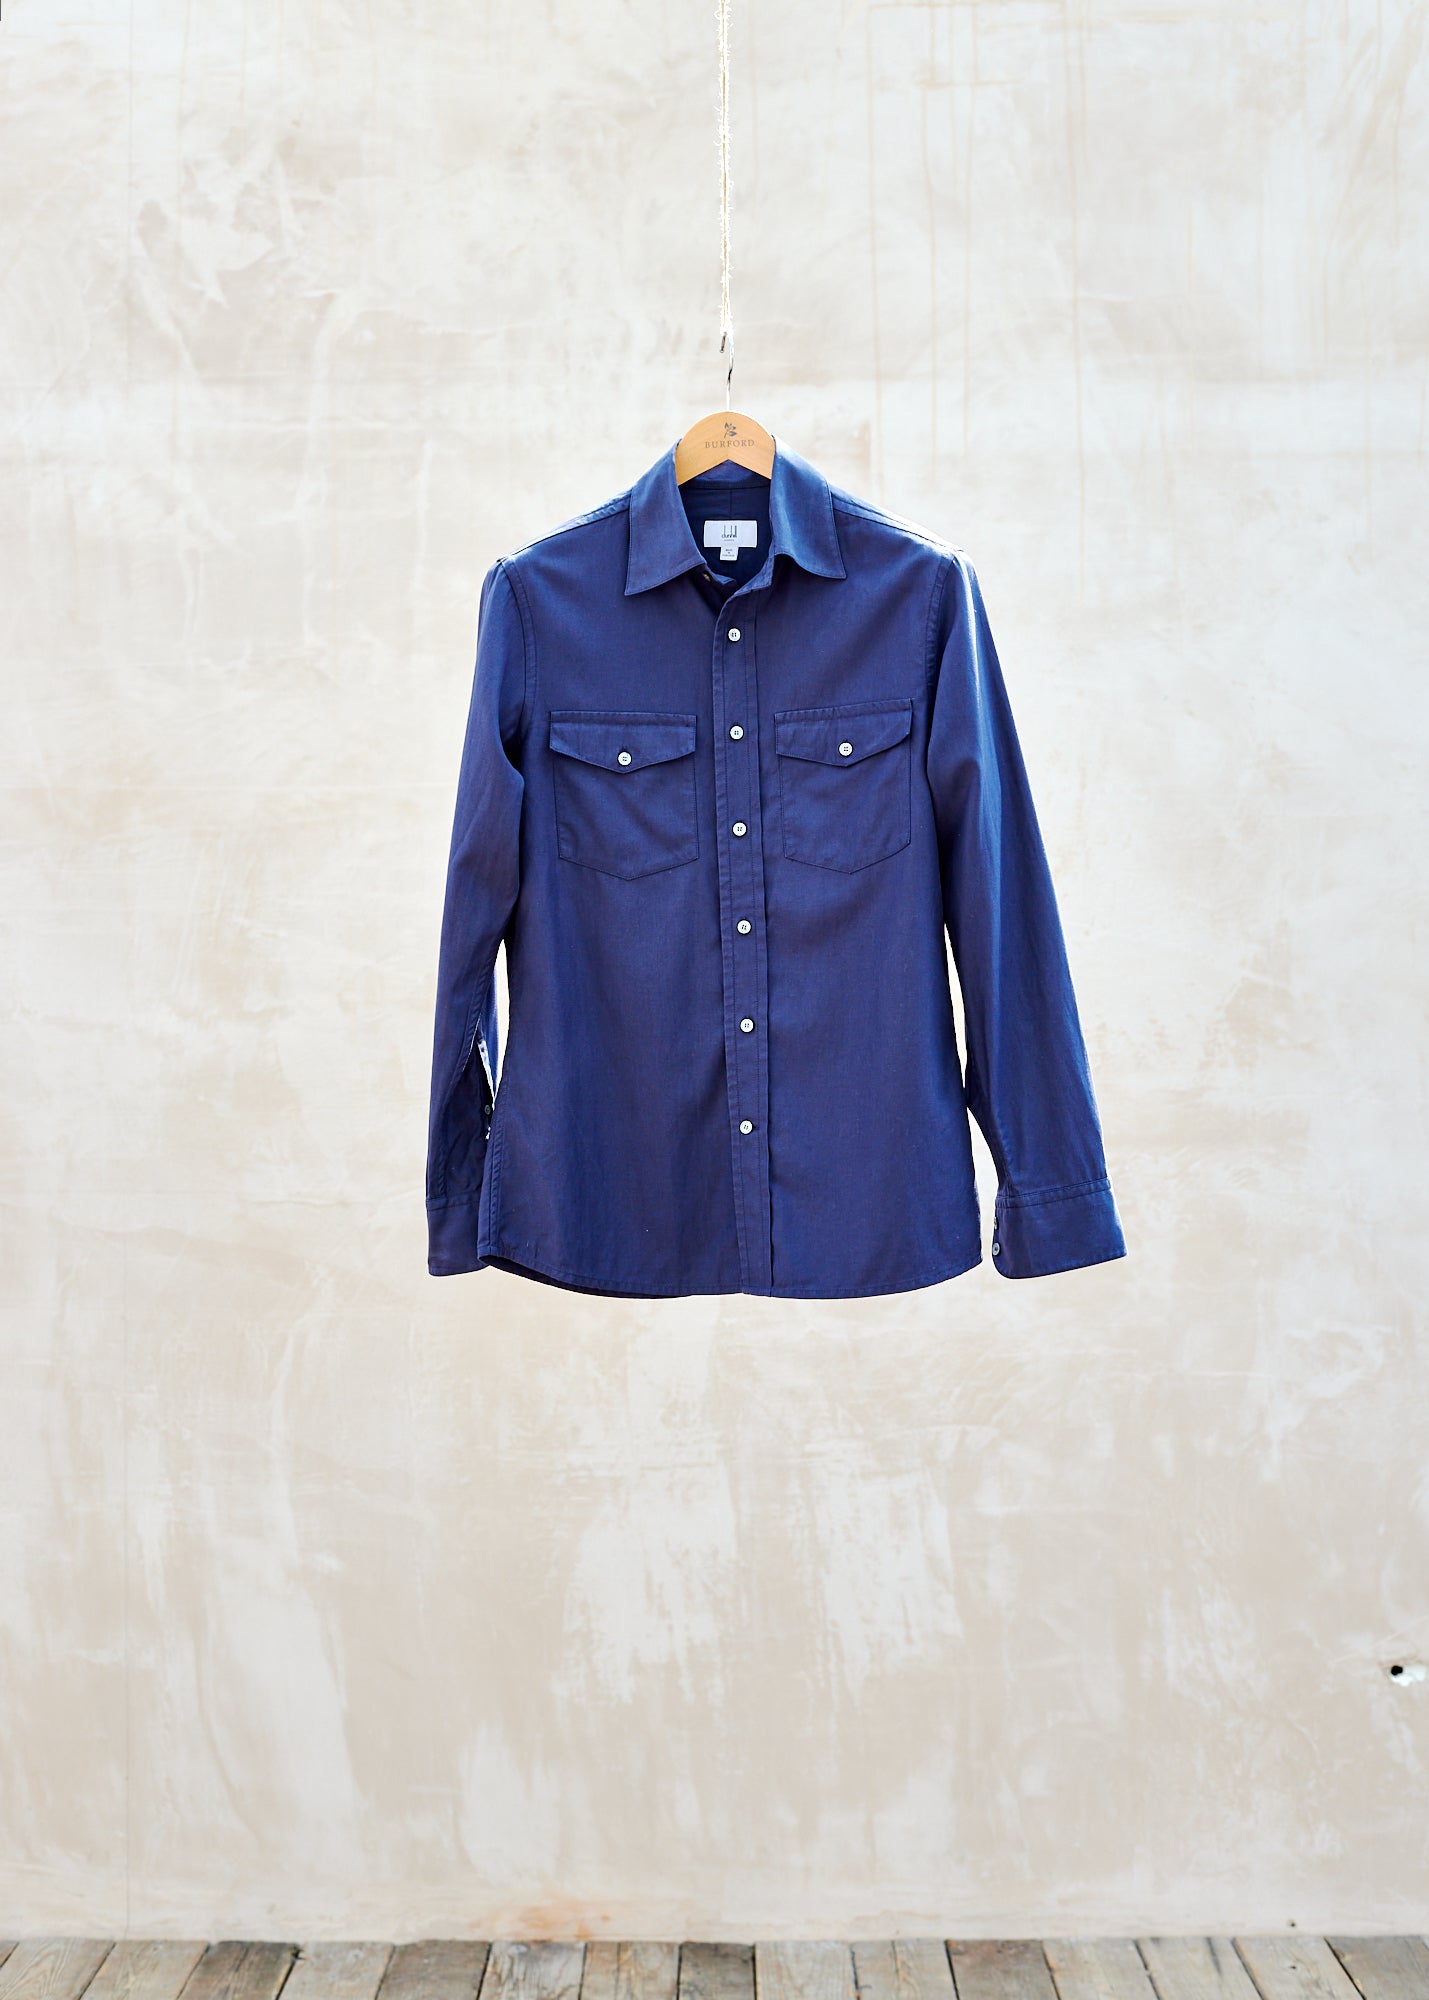 Dunhill Navy Cotton/Lyocell Work Shirt - M